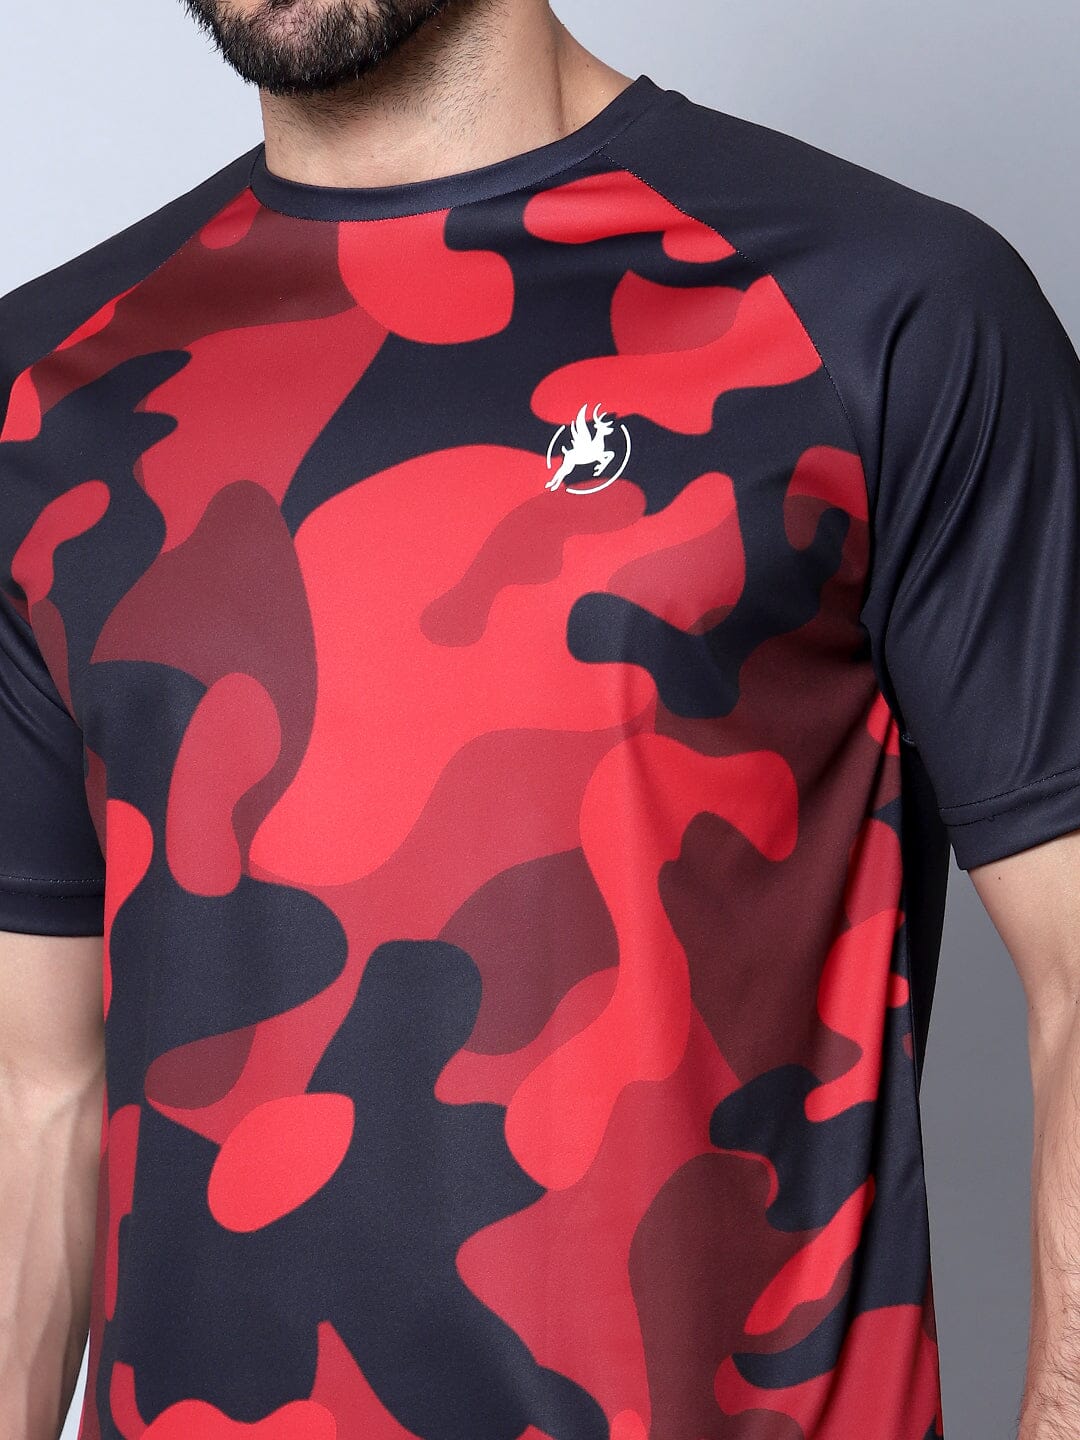 StealthFlex Camo Athletic Tshirt Black/Red - trenz